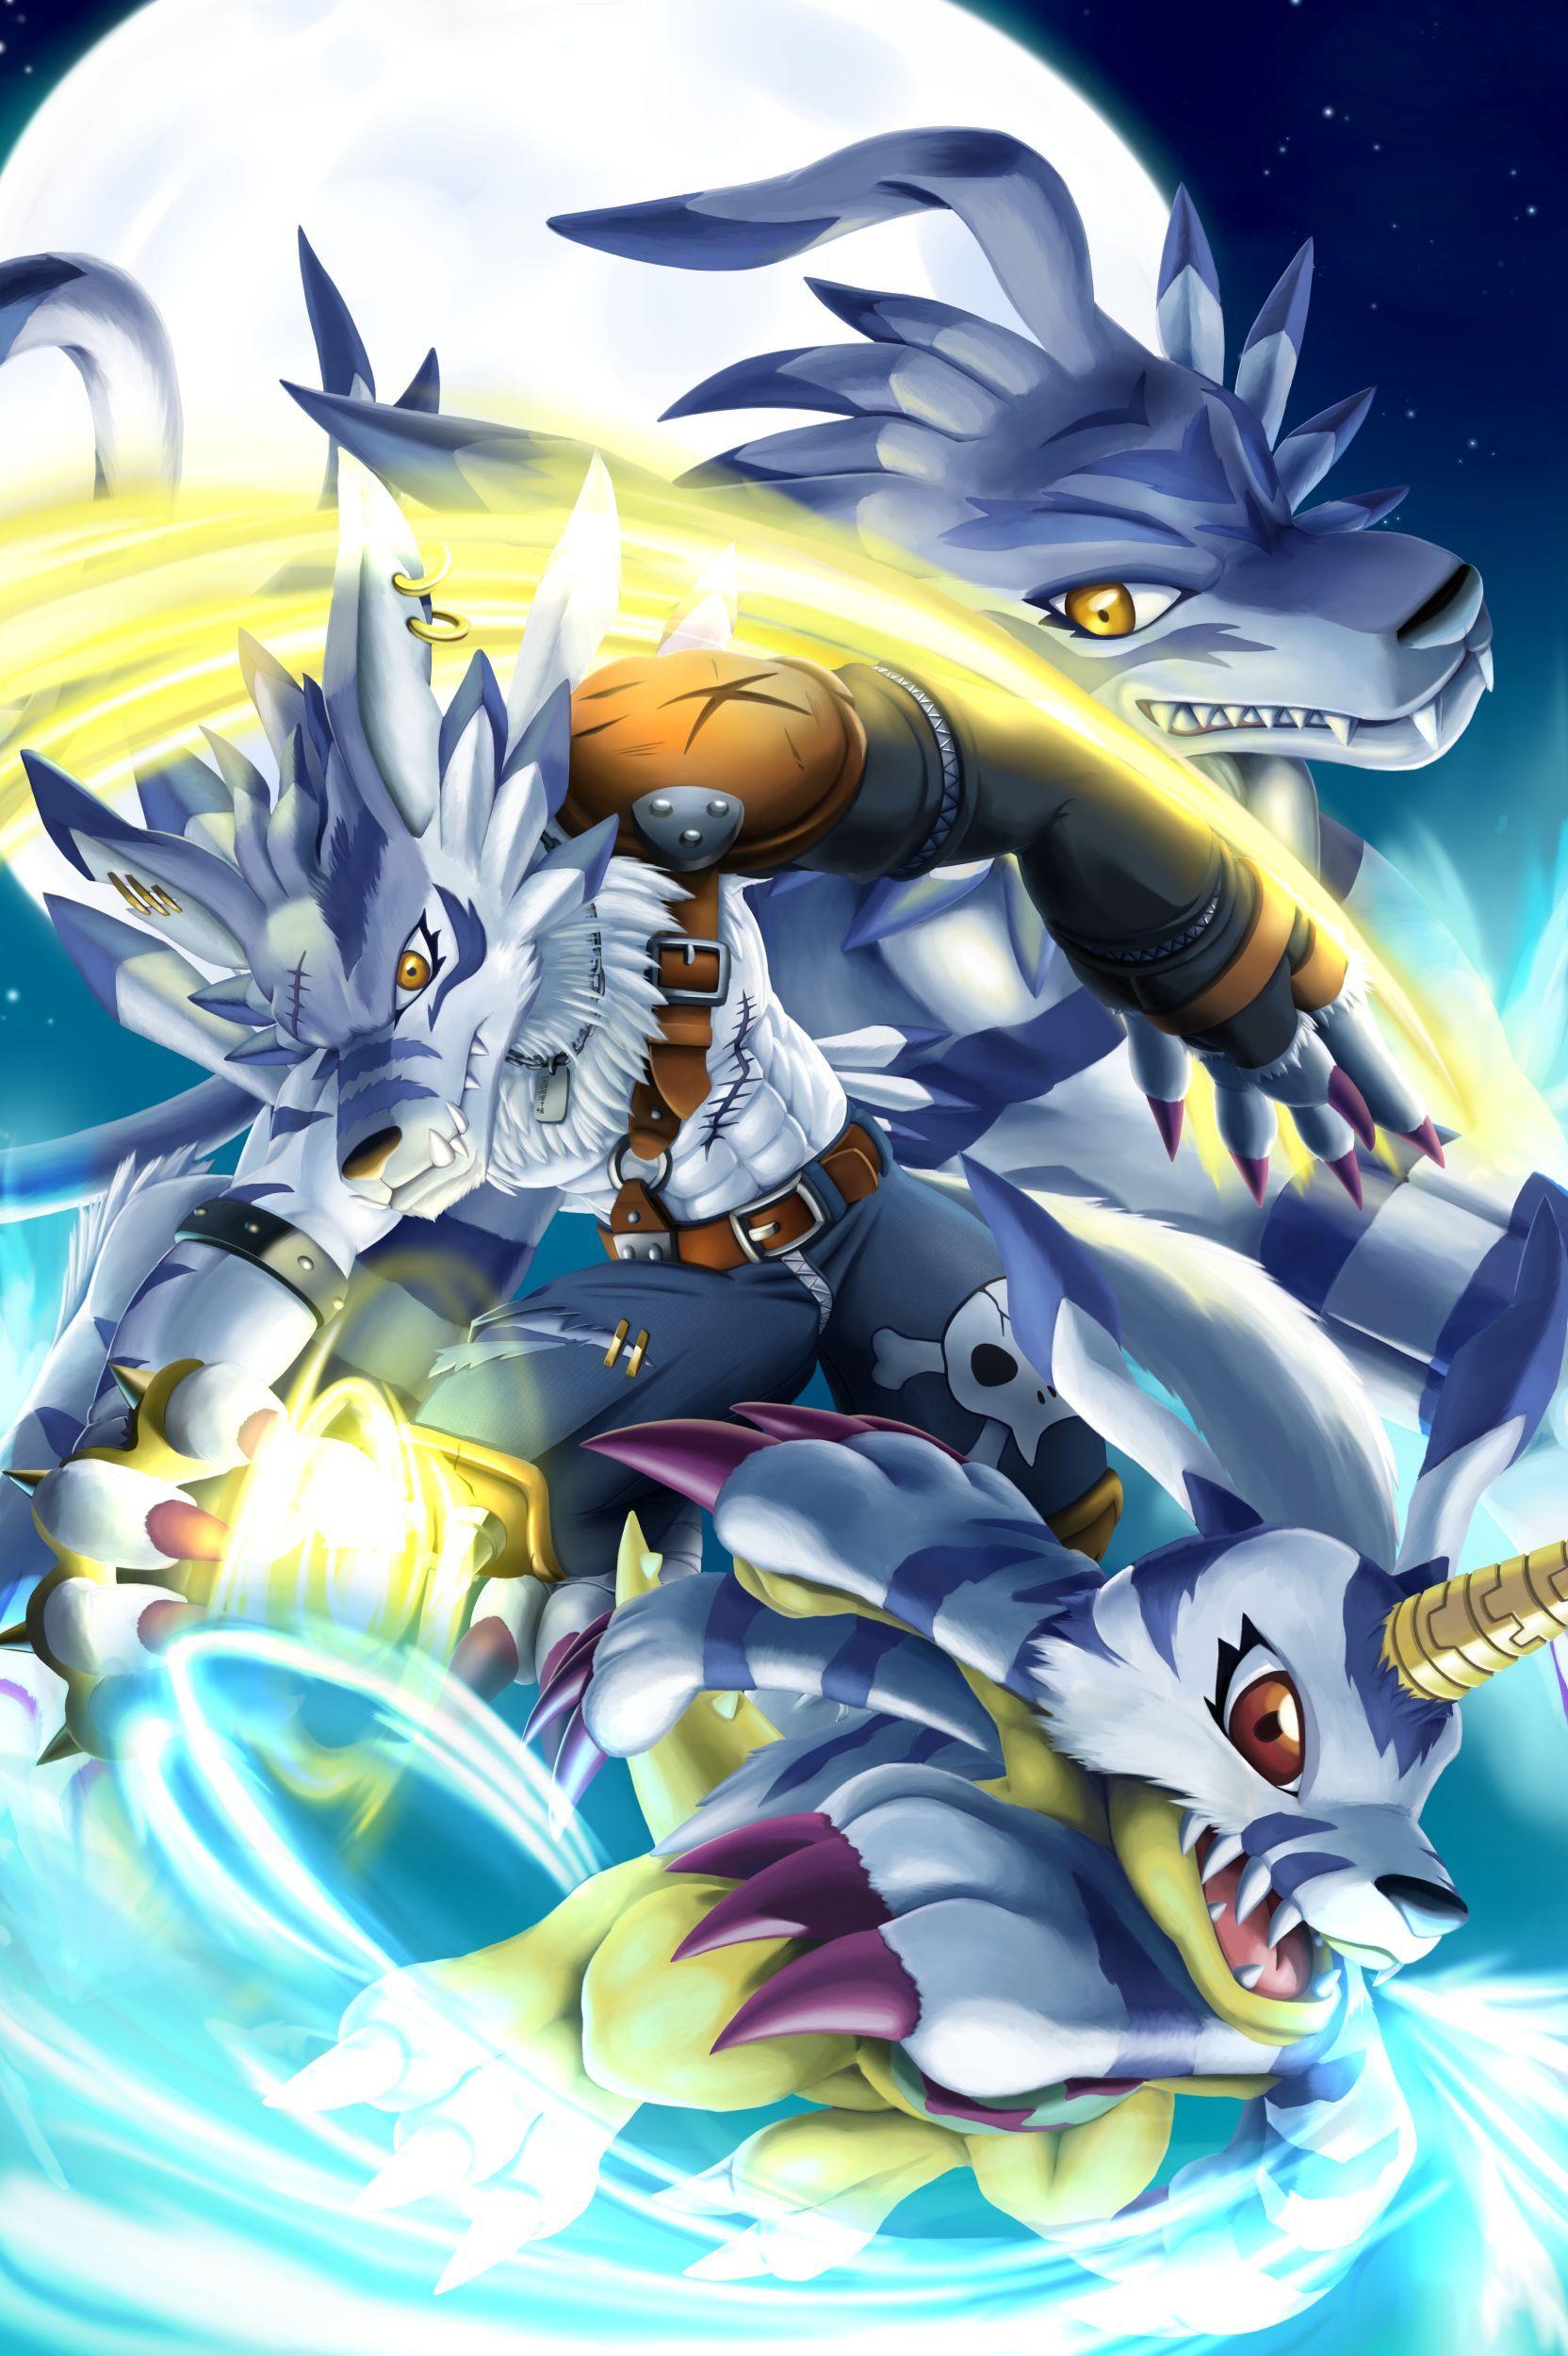 [49+] Digimon Fusion Wallpapers on WallpaperSafari